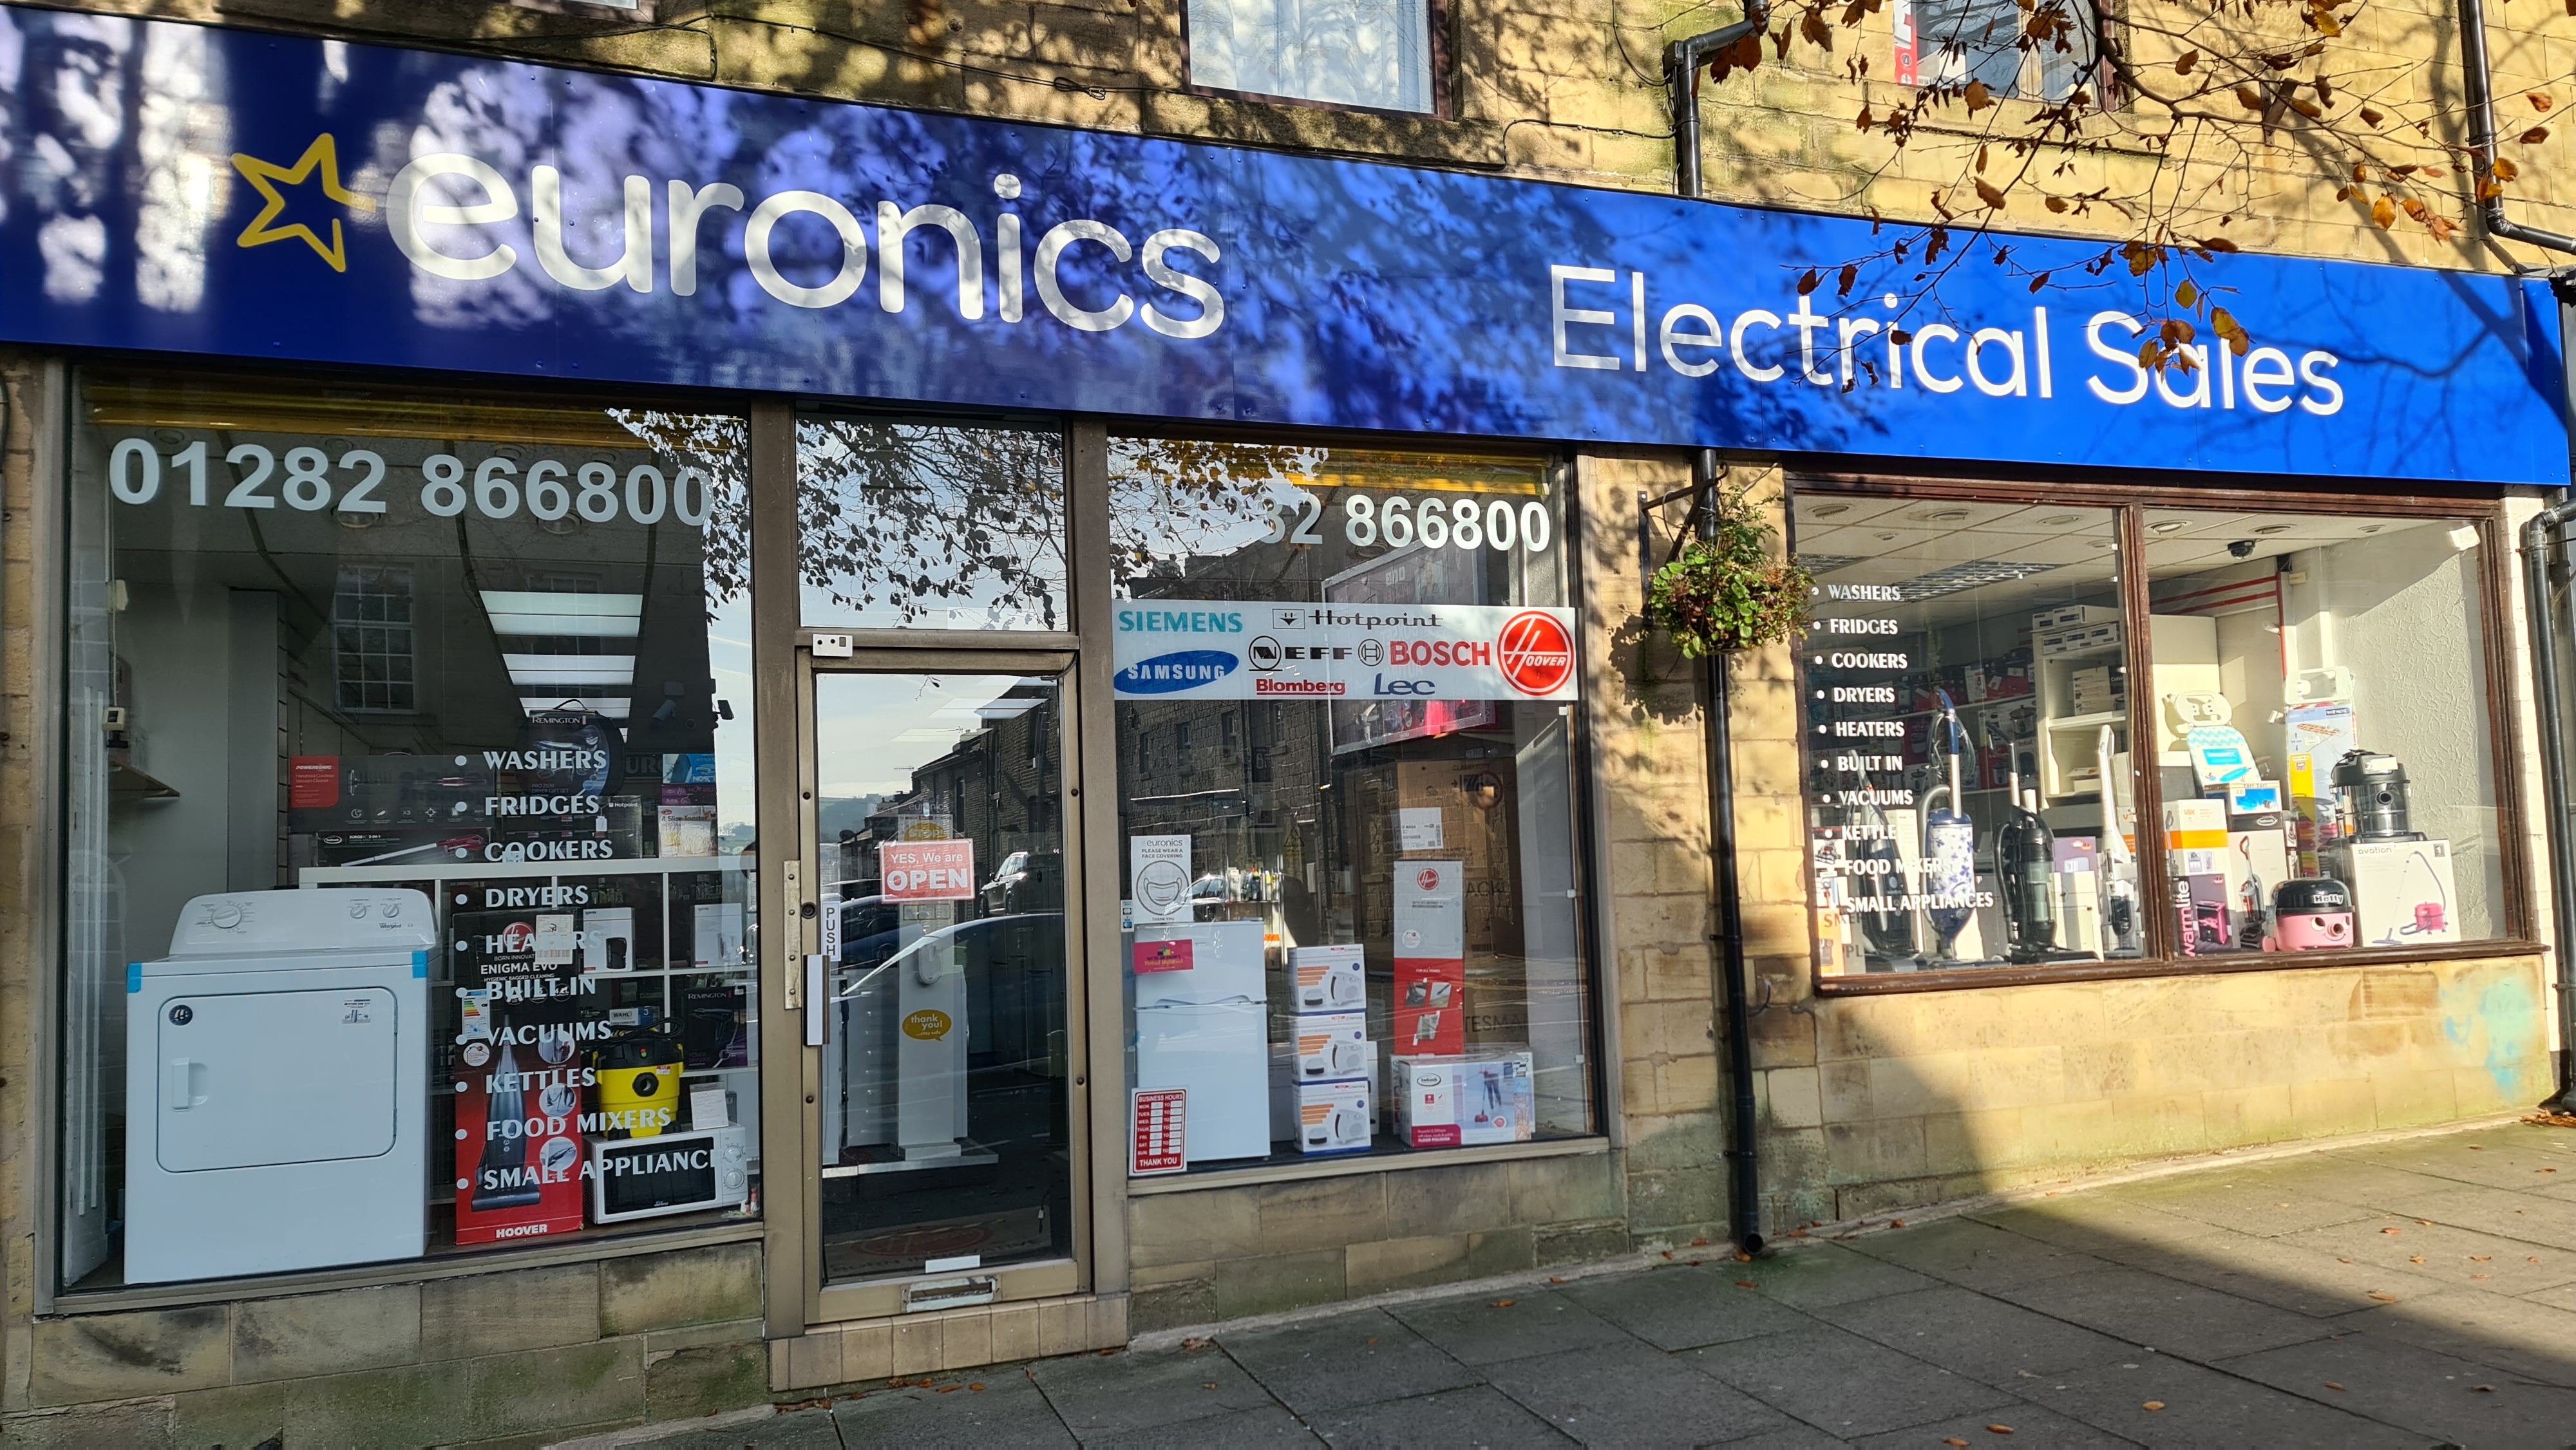 Electrical Sales Ltd